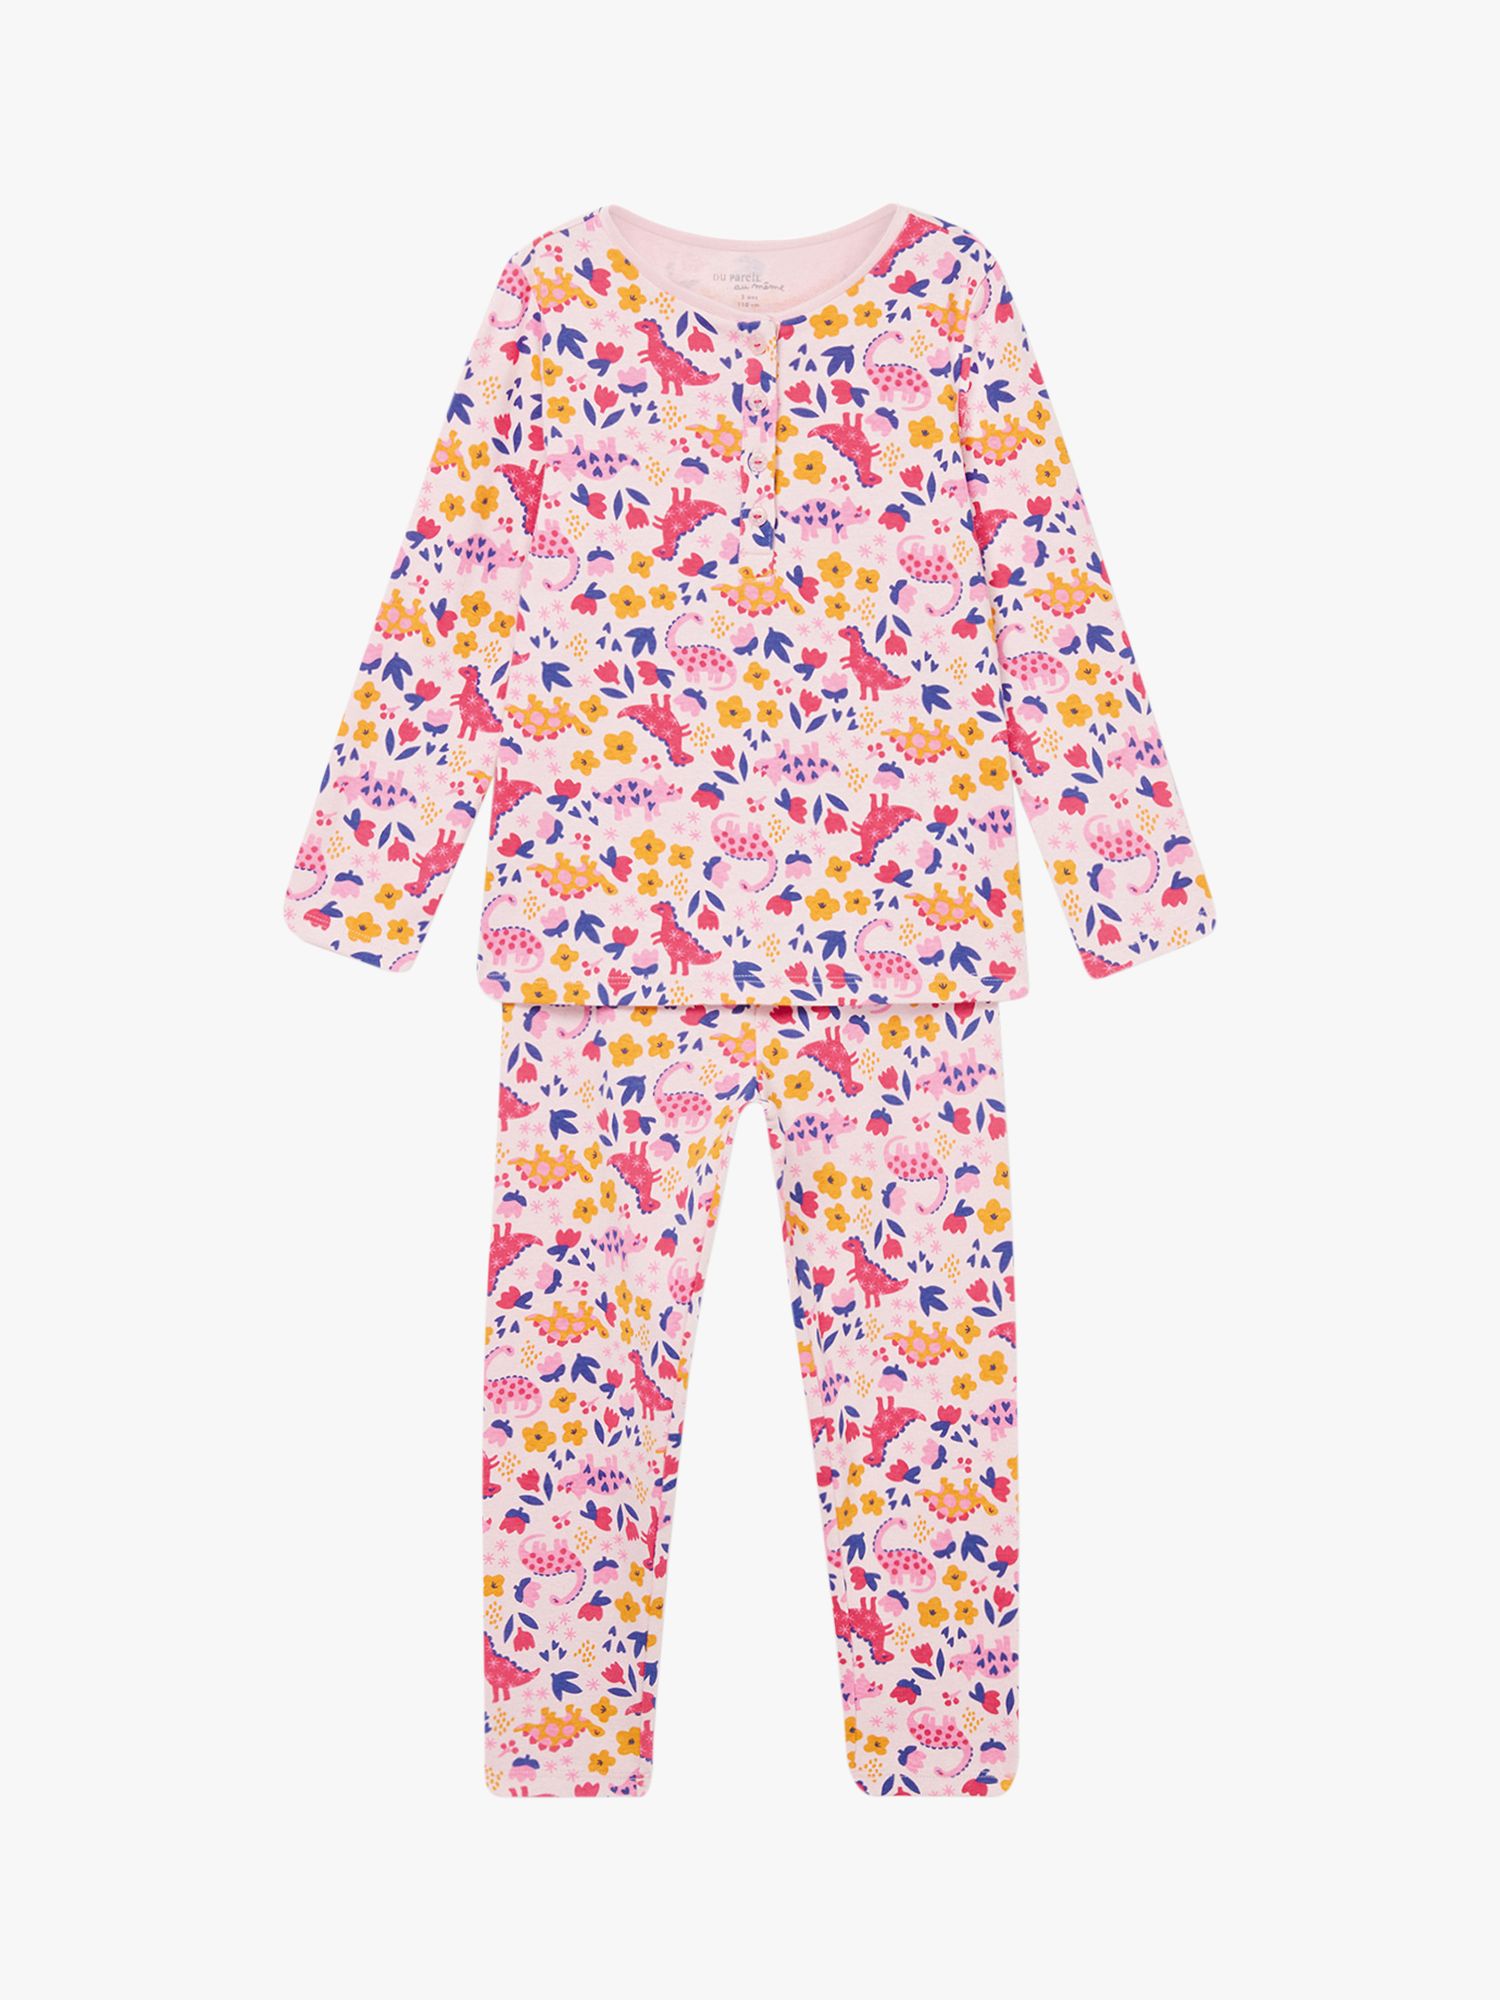 Du Pareil au même Kids' Dinosaur Print Pyjama Set, Pink/Multi, 2 years